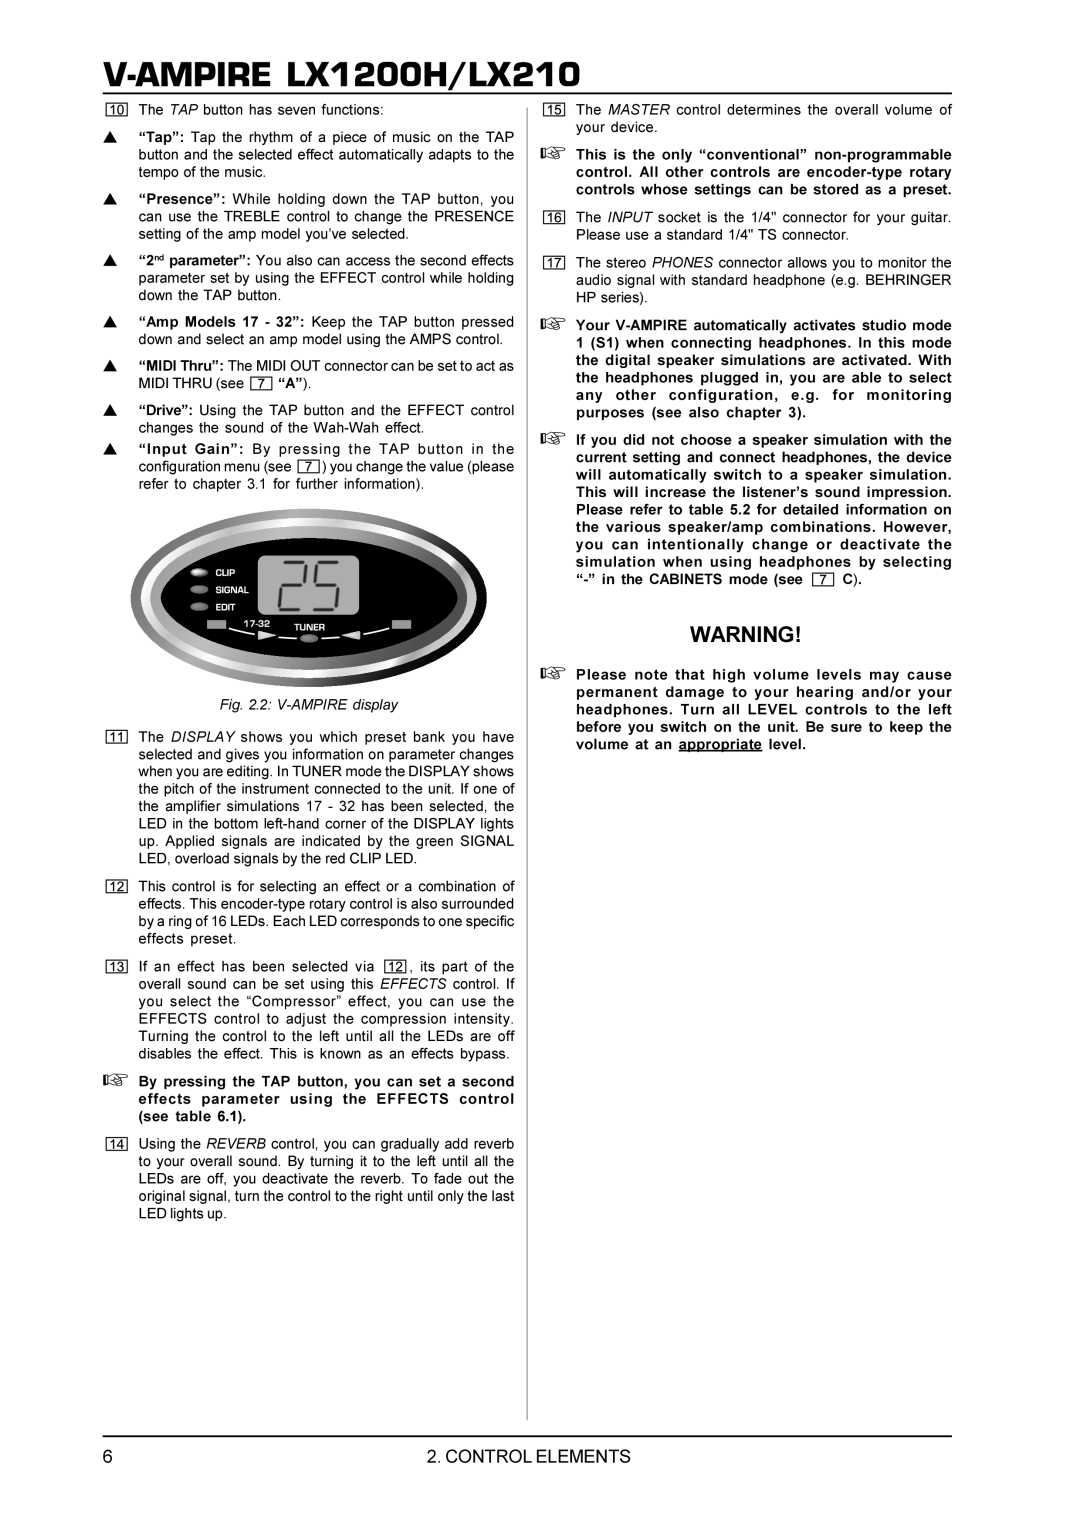 Behringer manual V-AMPIRELX1200H/LX210, Control Elements, 2 V-AMPIREdisplay 